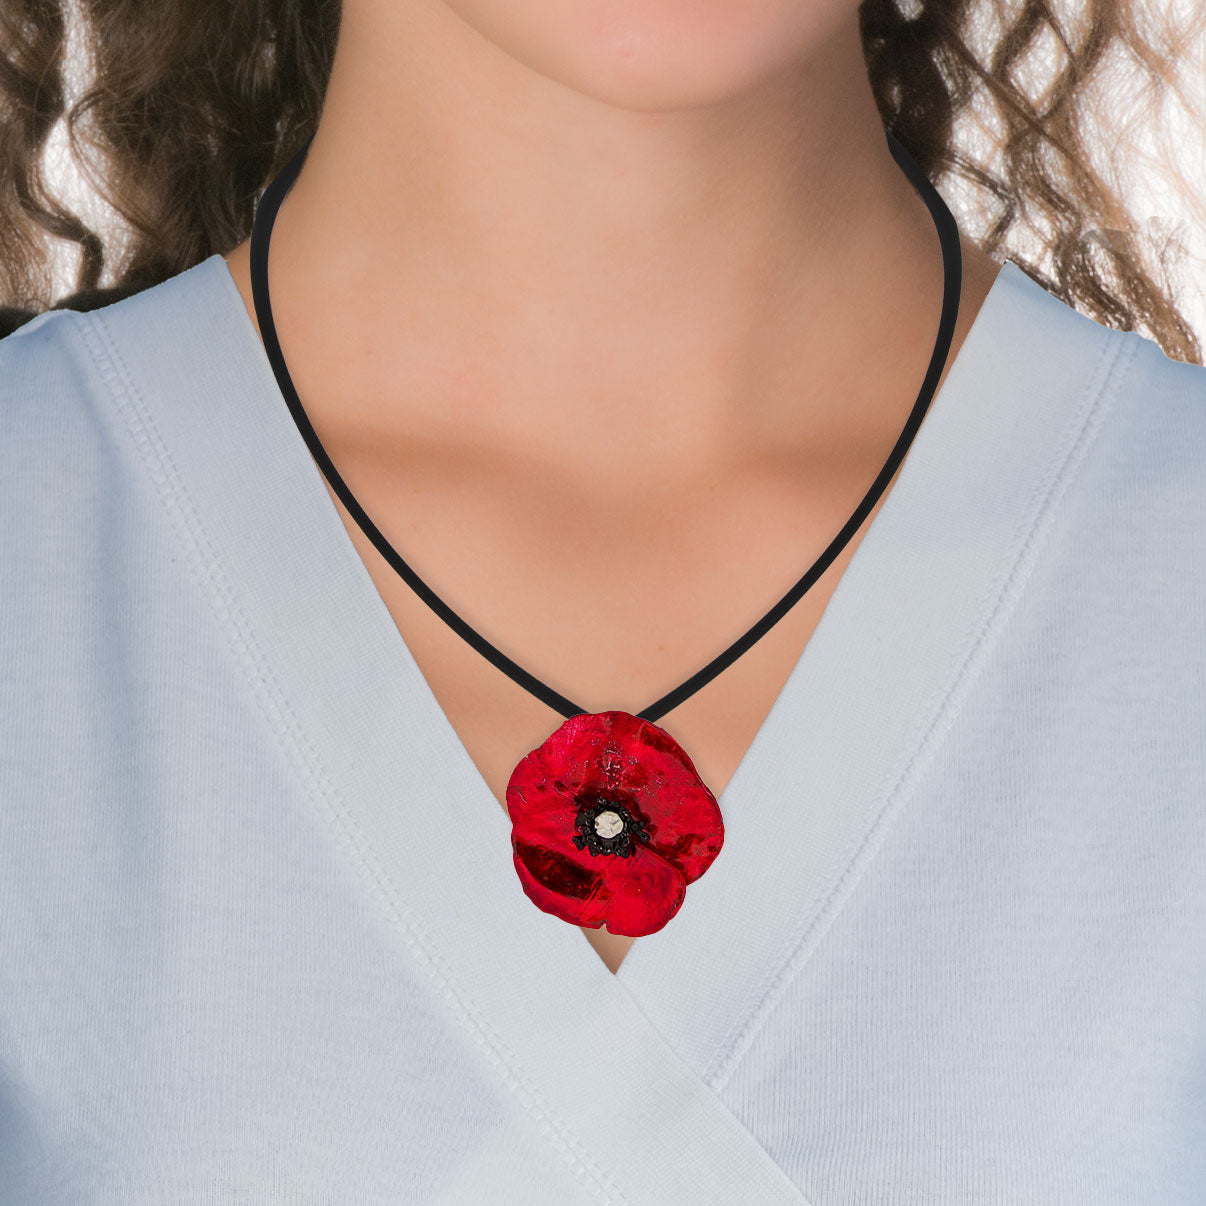 Handmade Silver Impressive Red Poppy Short Rubber Choker Necklace - Anthos Crafts